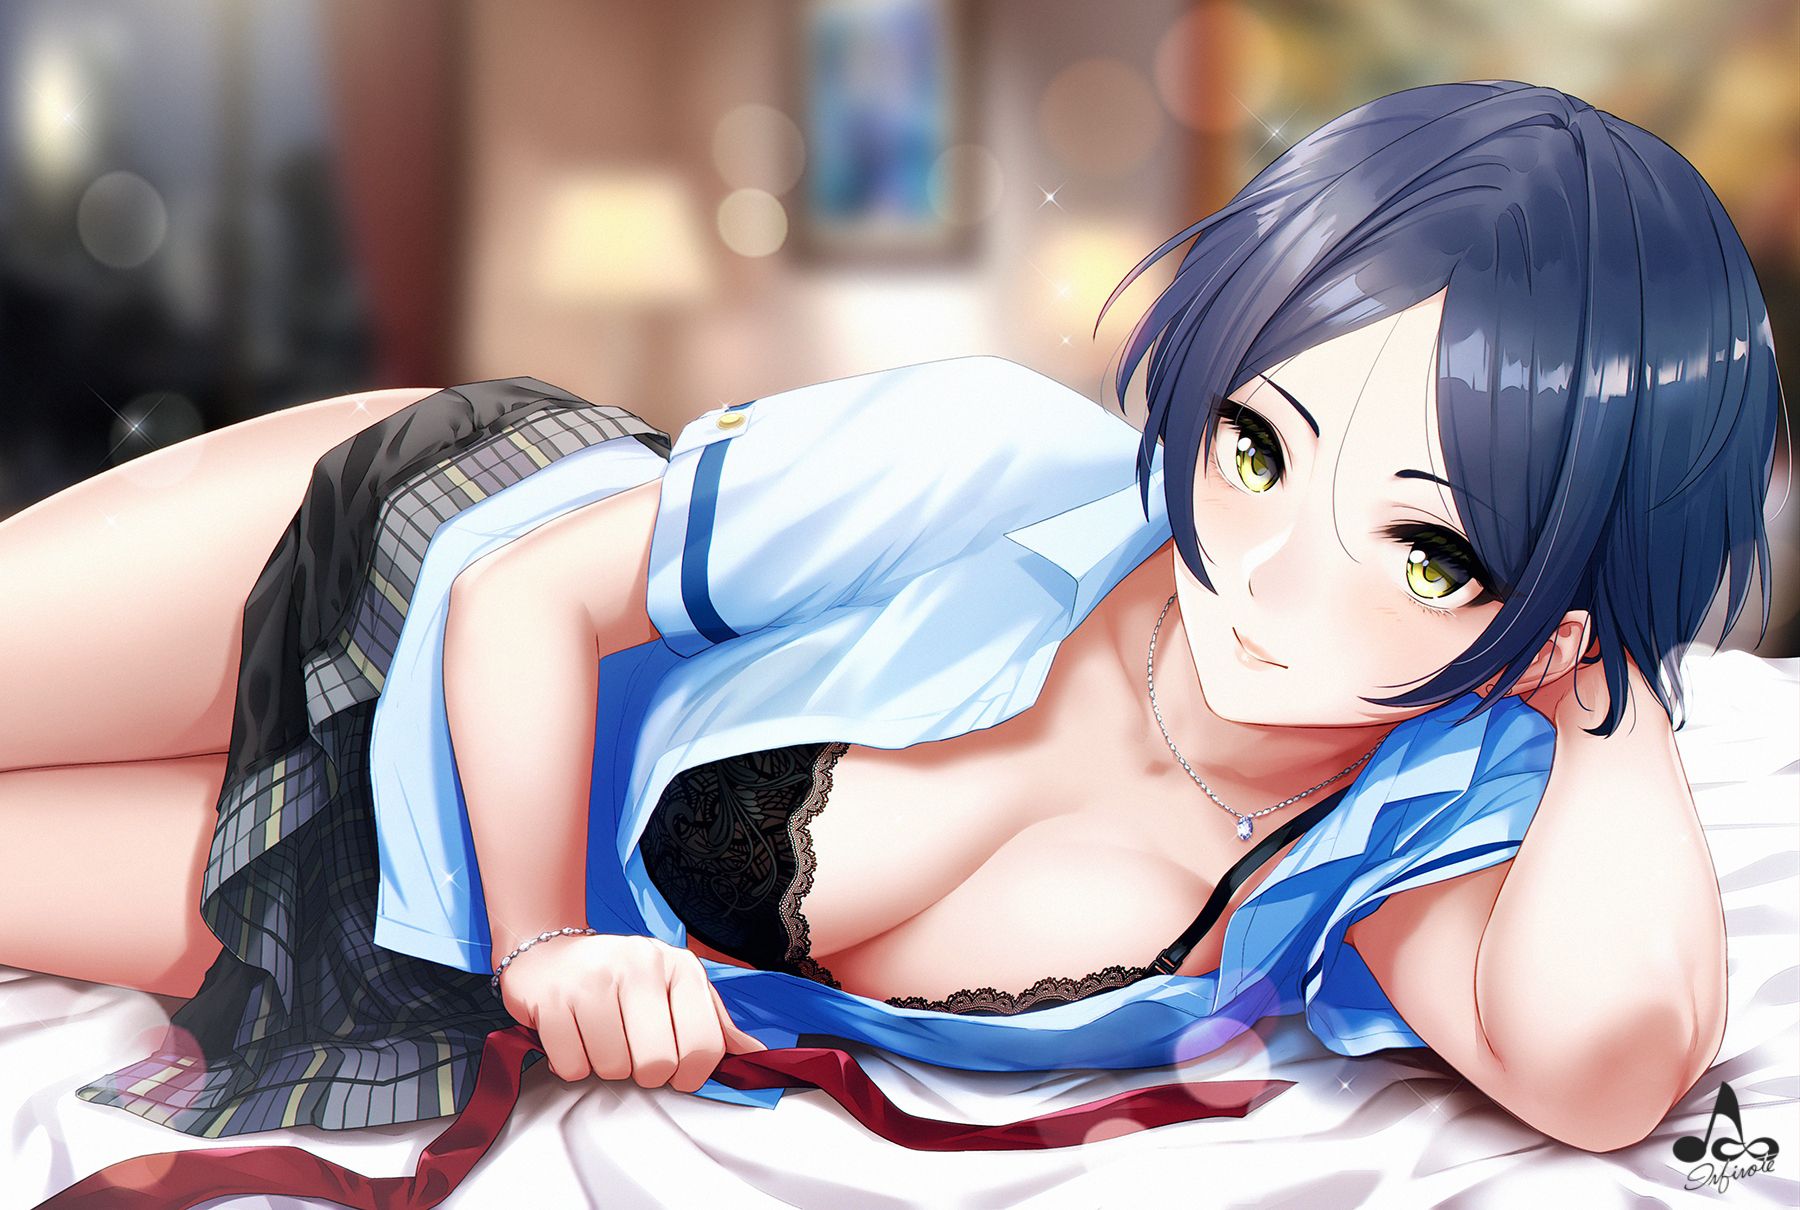 Erotic anime summary Erotic images of beautiful girls wearing lace underwear [50 photos] 36